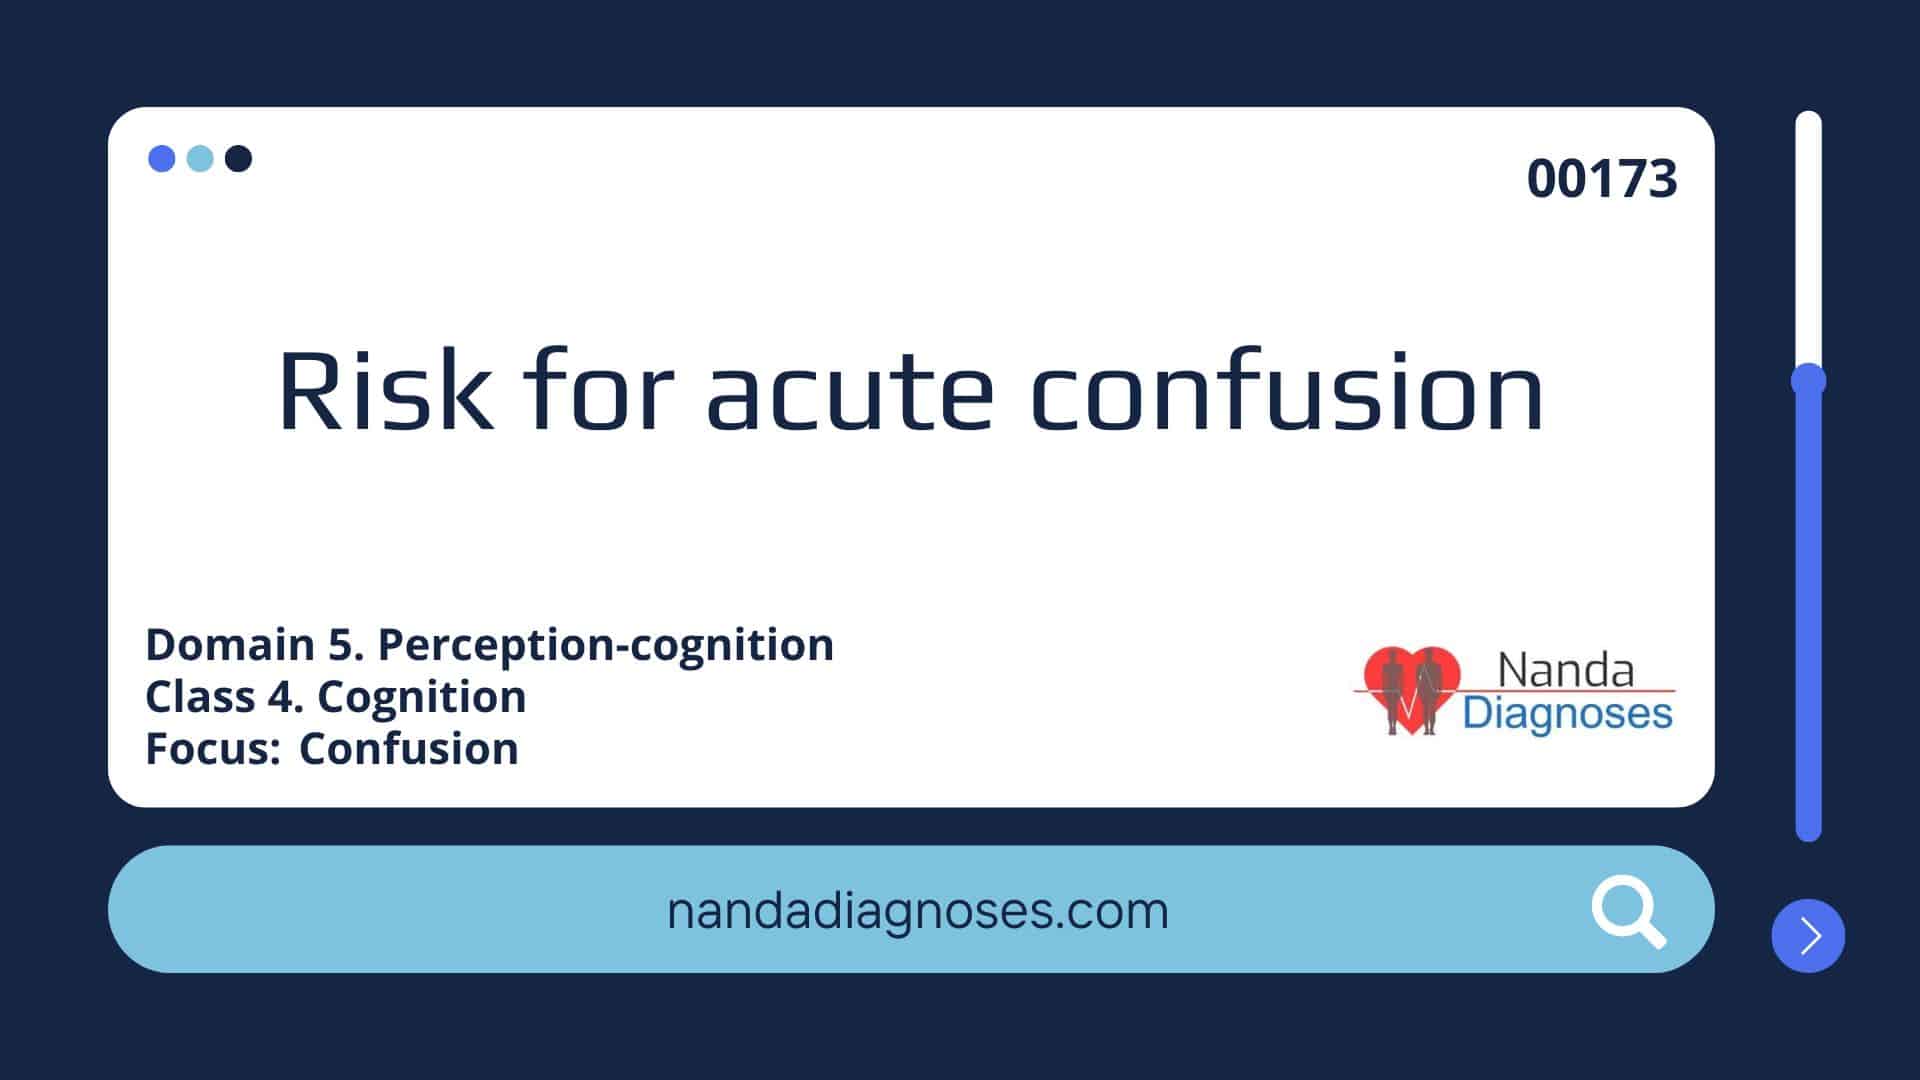 Nursing diagnosis Risk for acute confusion